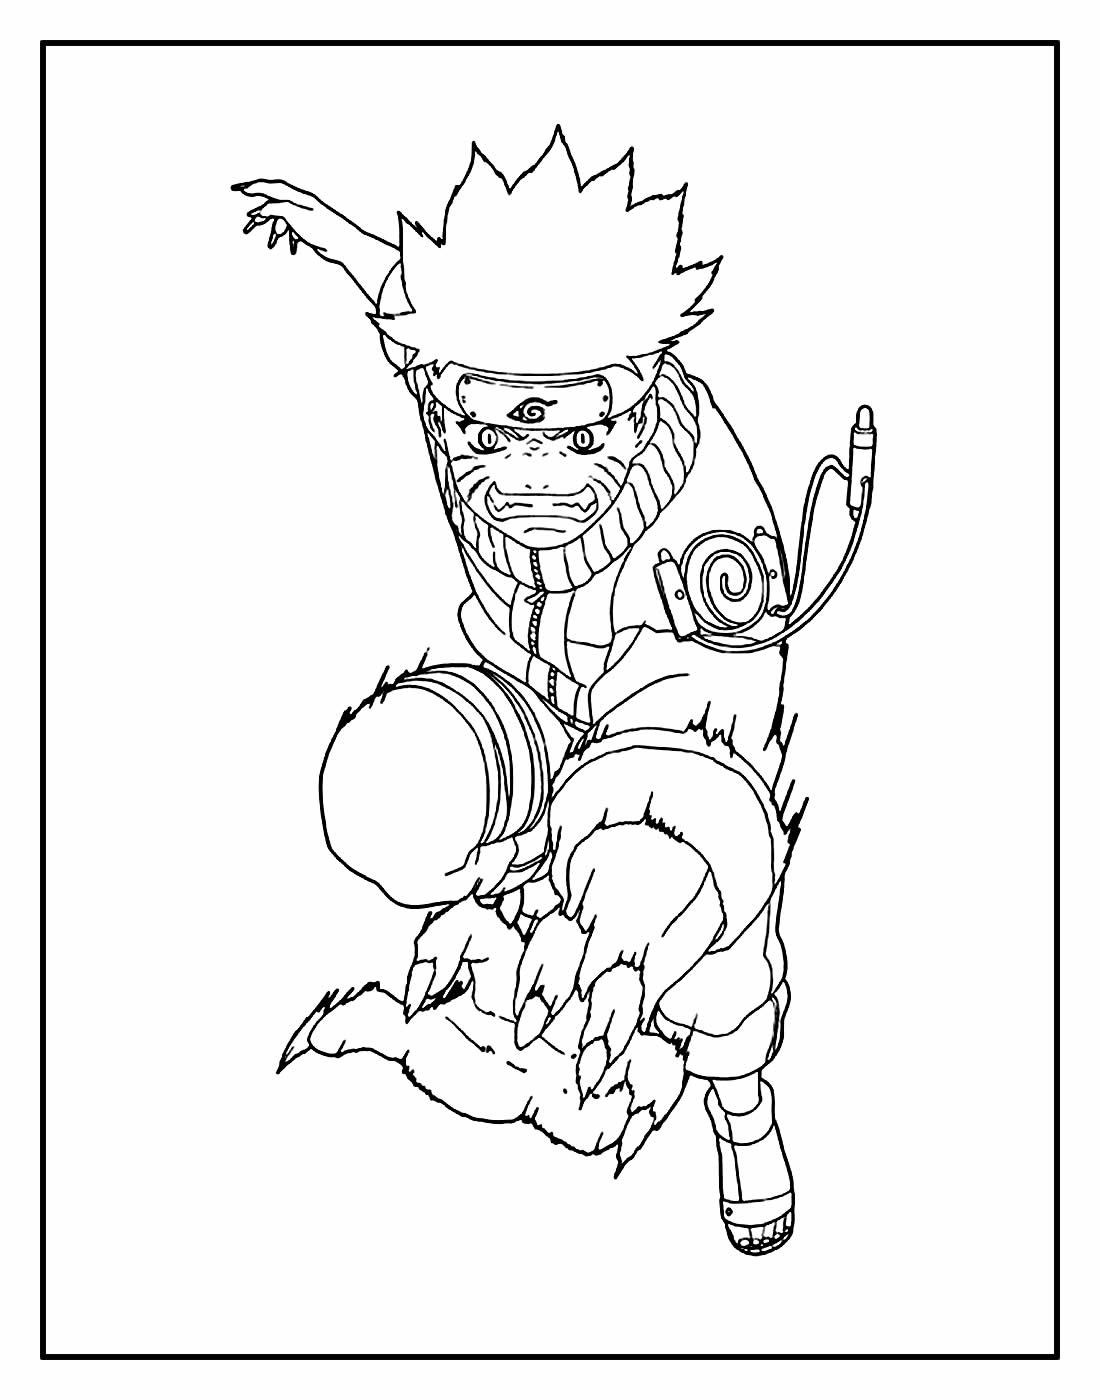 Desenho para colorir de Naruto